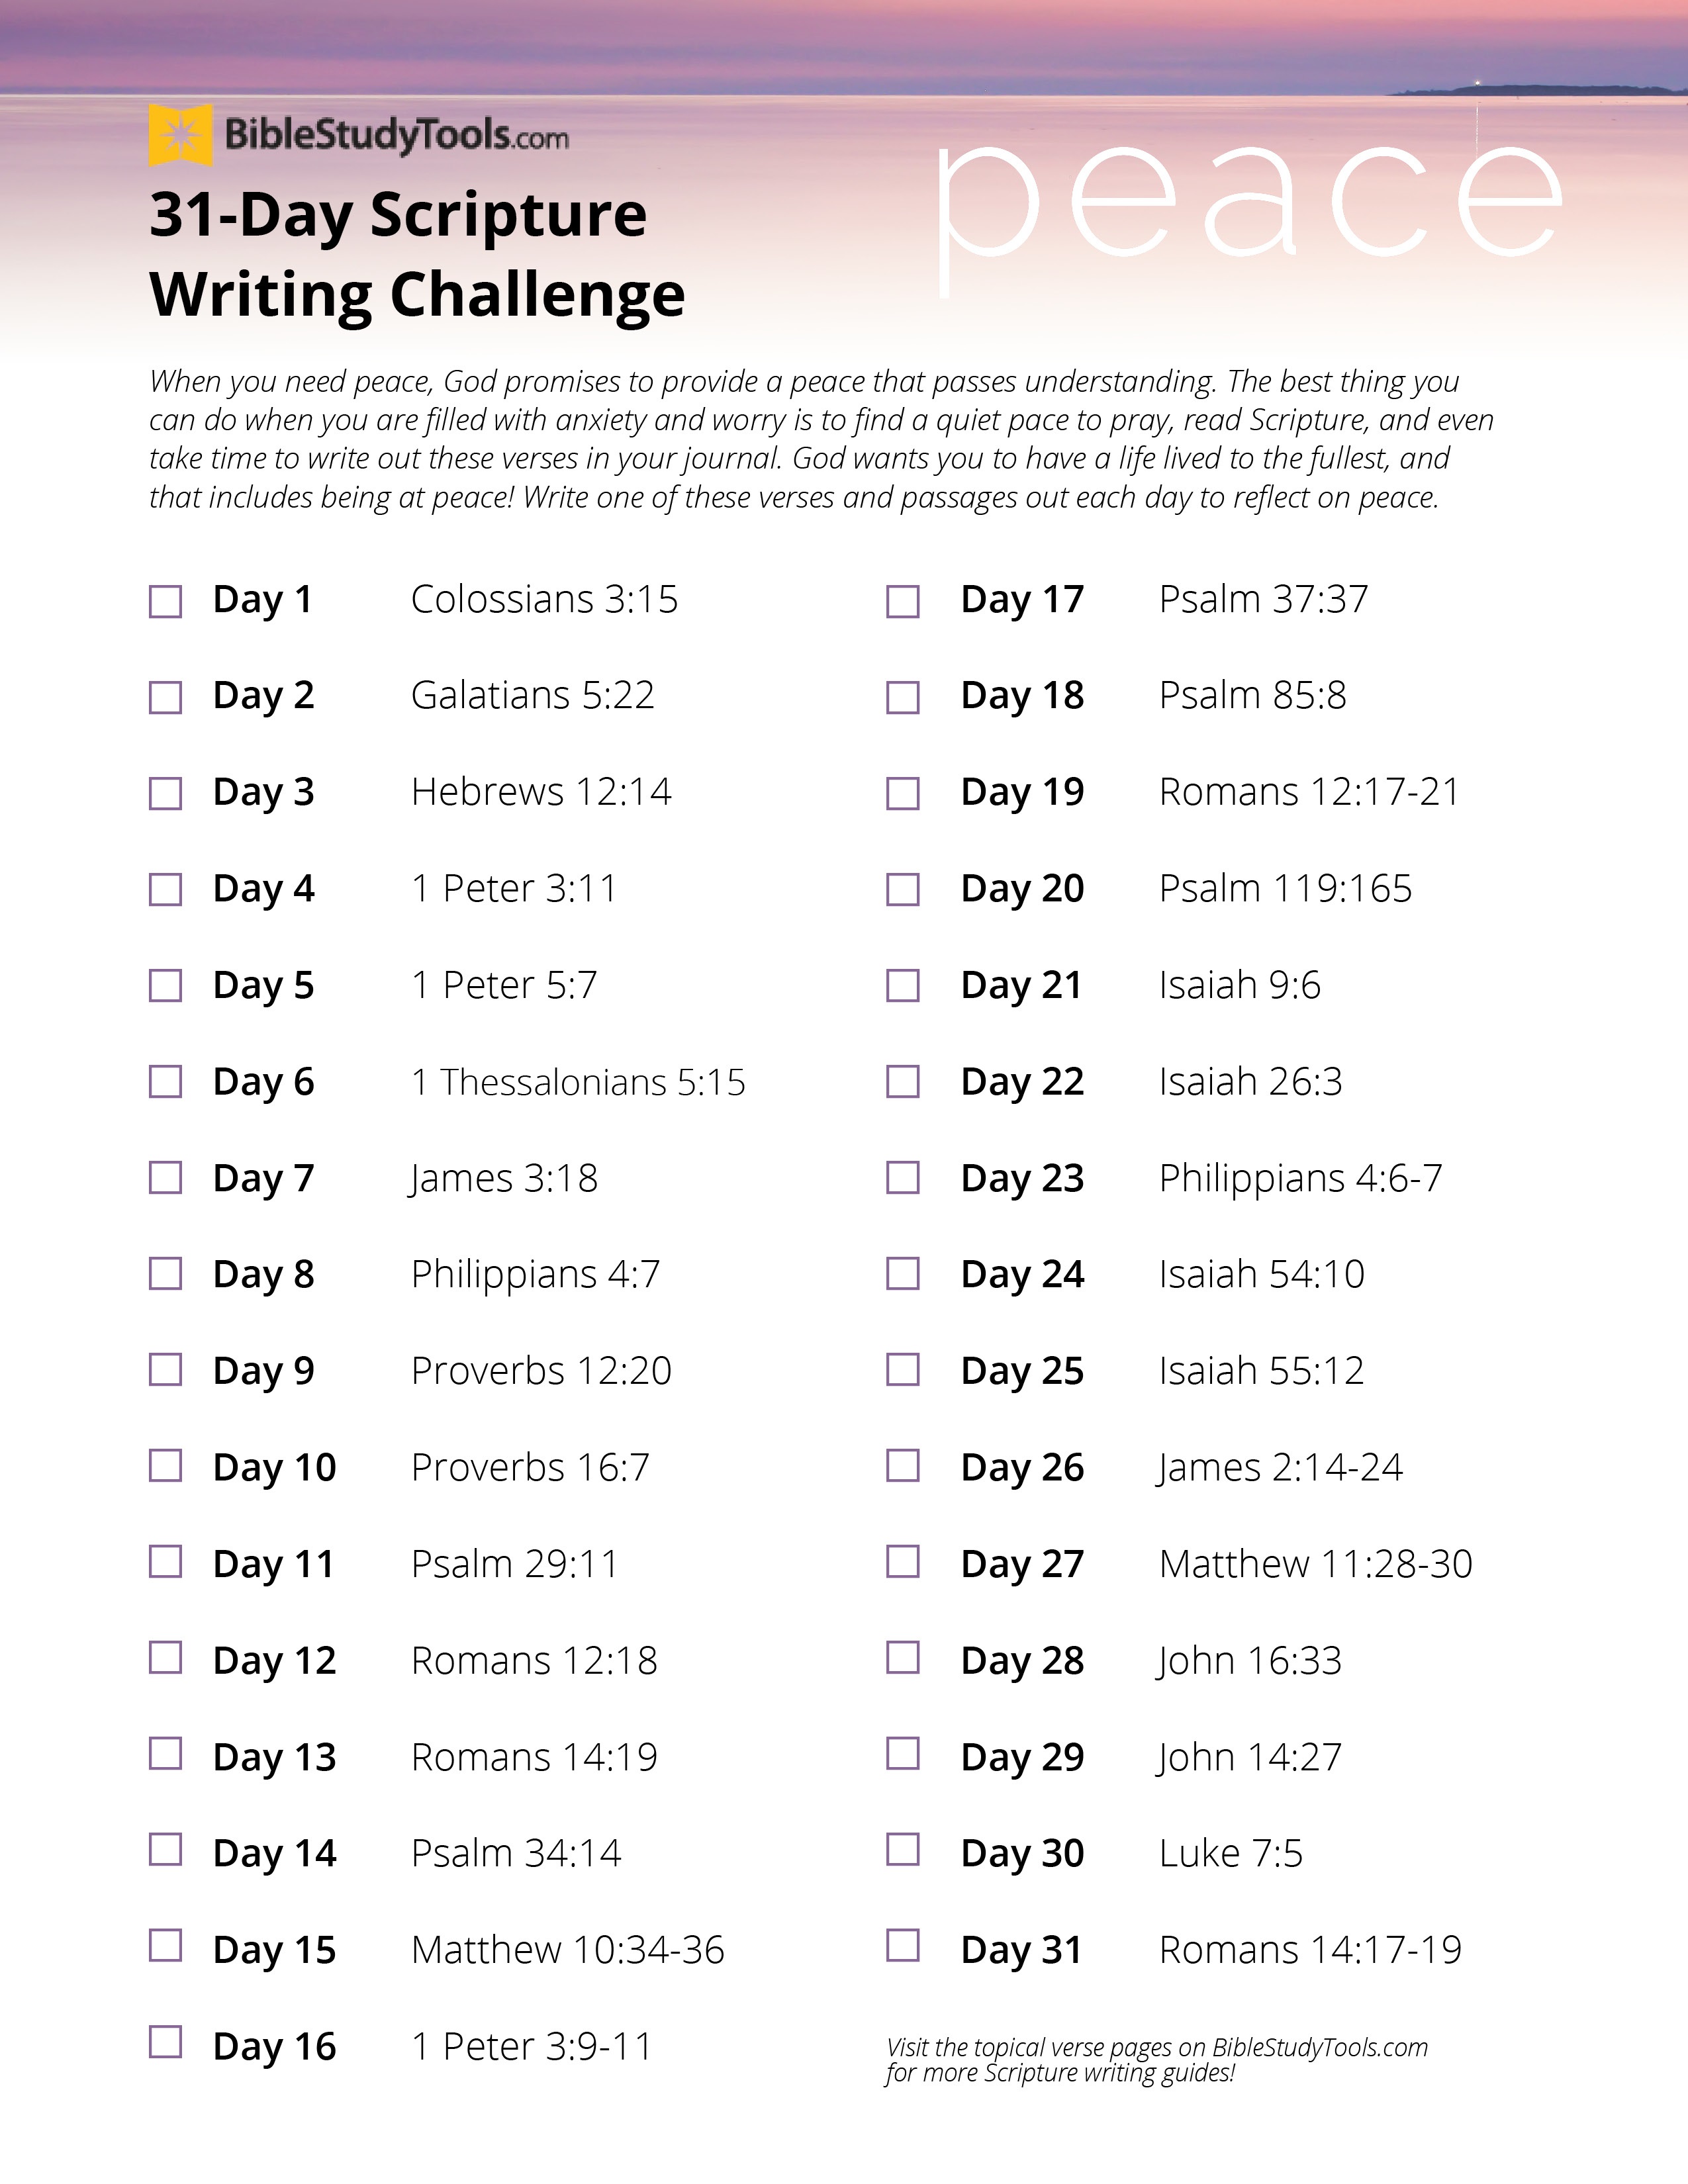 30 day writing challenge list